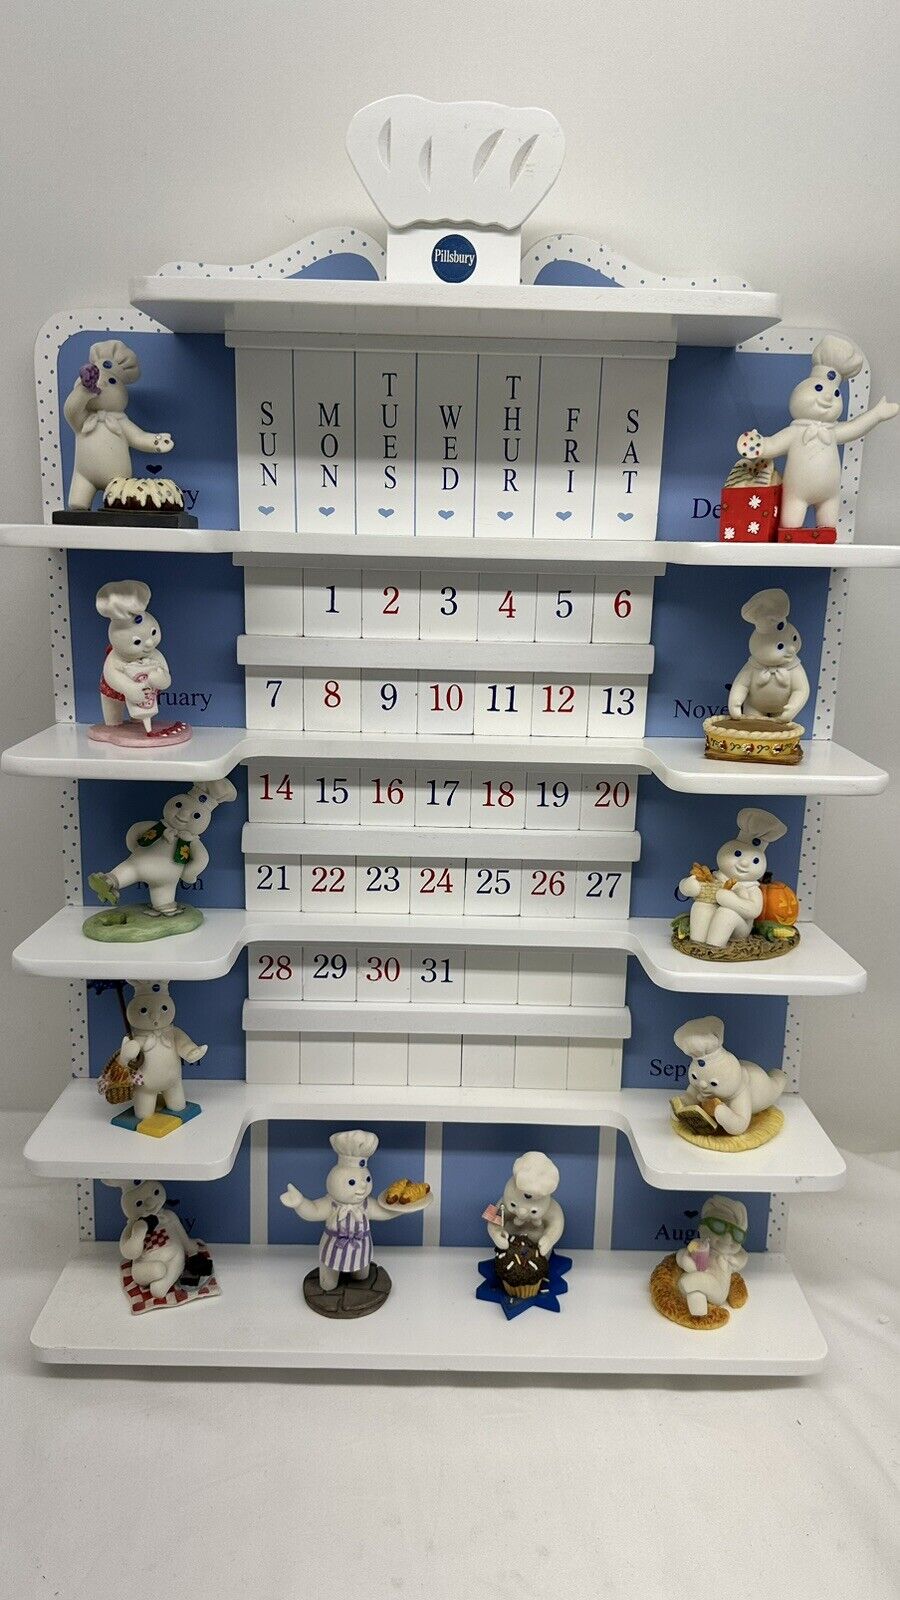 VTG 1997 Pillsbury Doughboy Danbury Mint Calendar with Figures and tiles